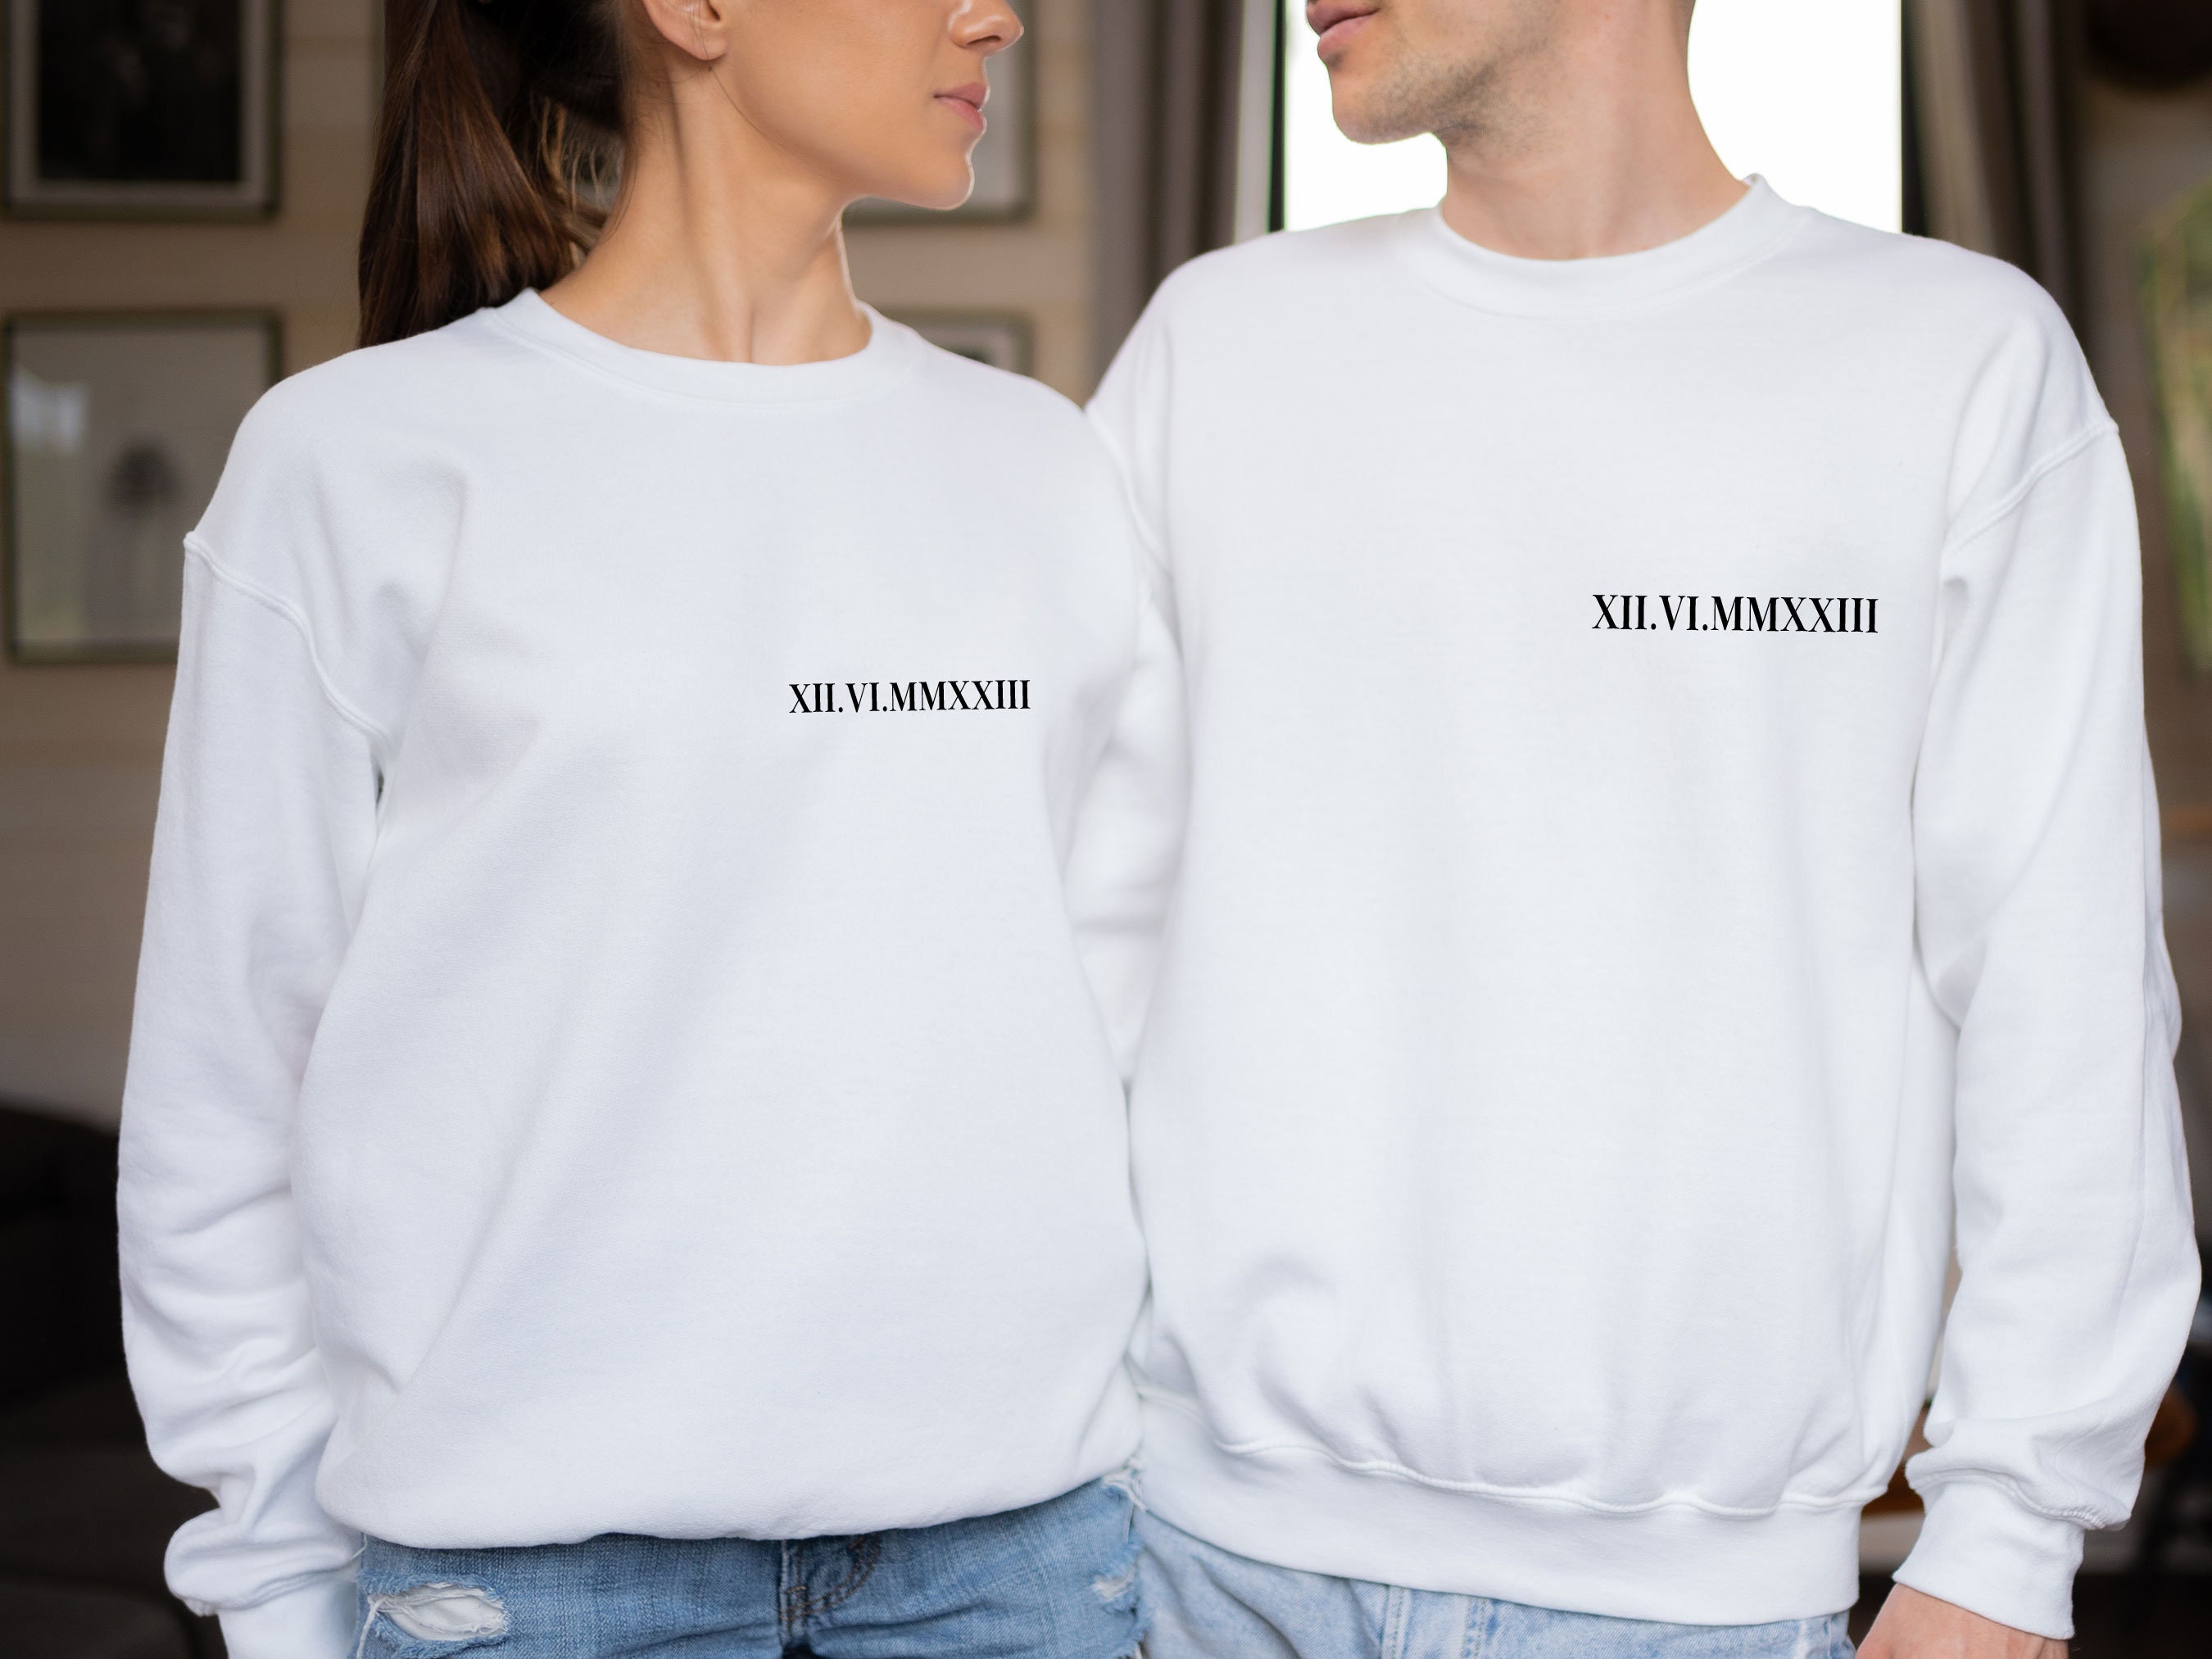 Wedding Sweatshirt, Roman Numeral Gift, Personalised Wedding, Matching Jumper, Couple Honeymoon Sweatshirt